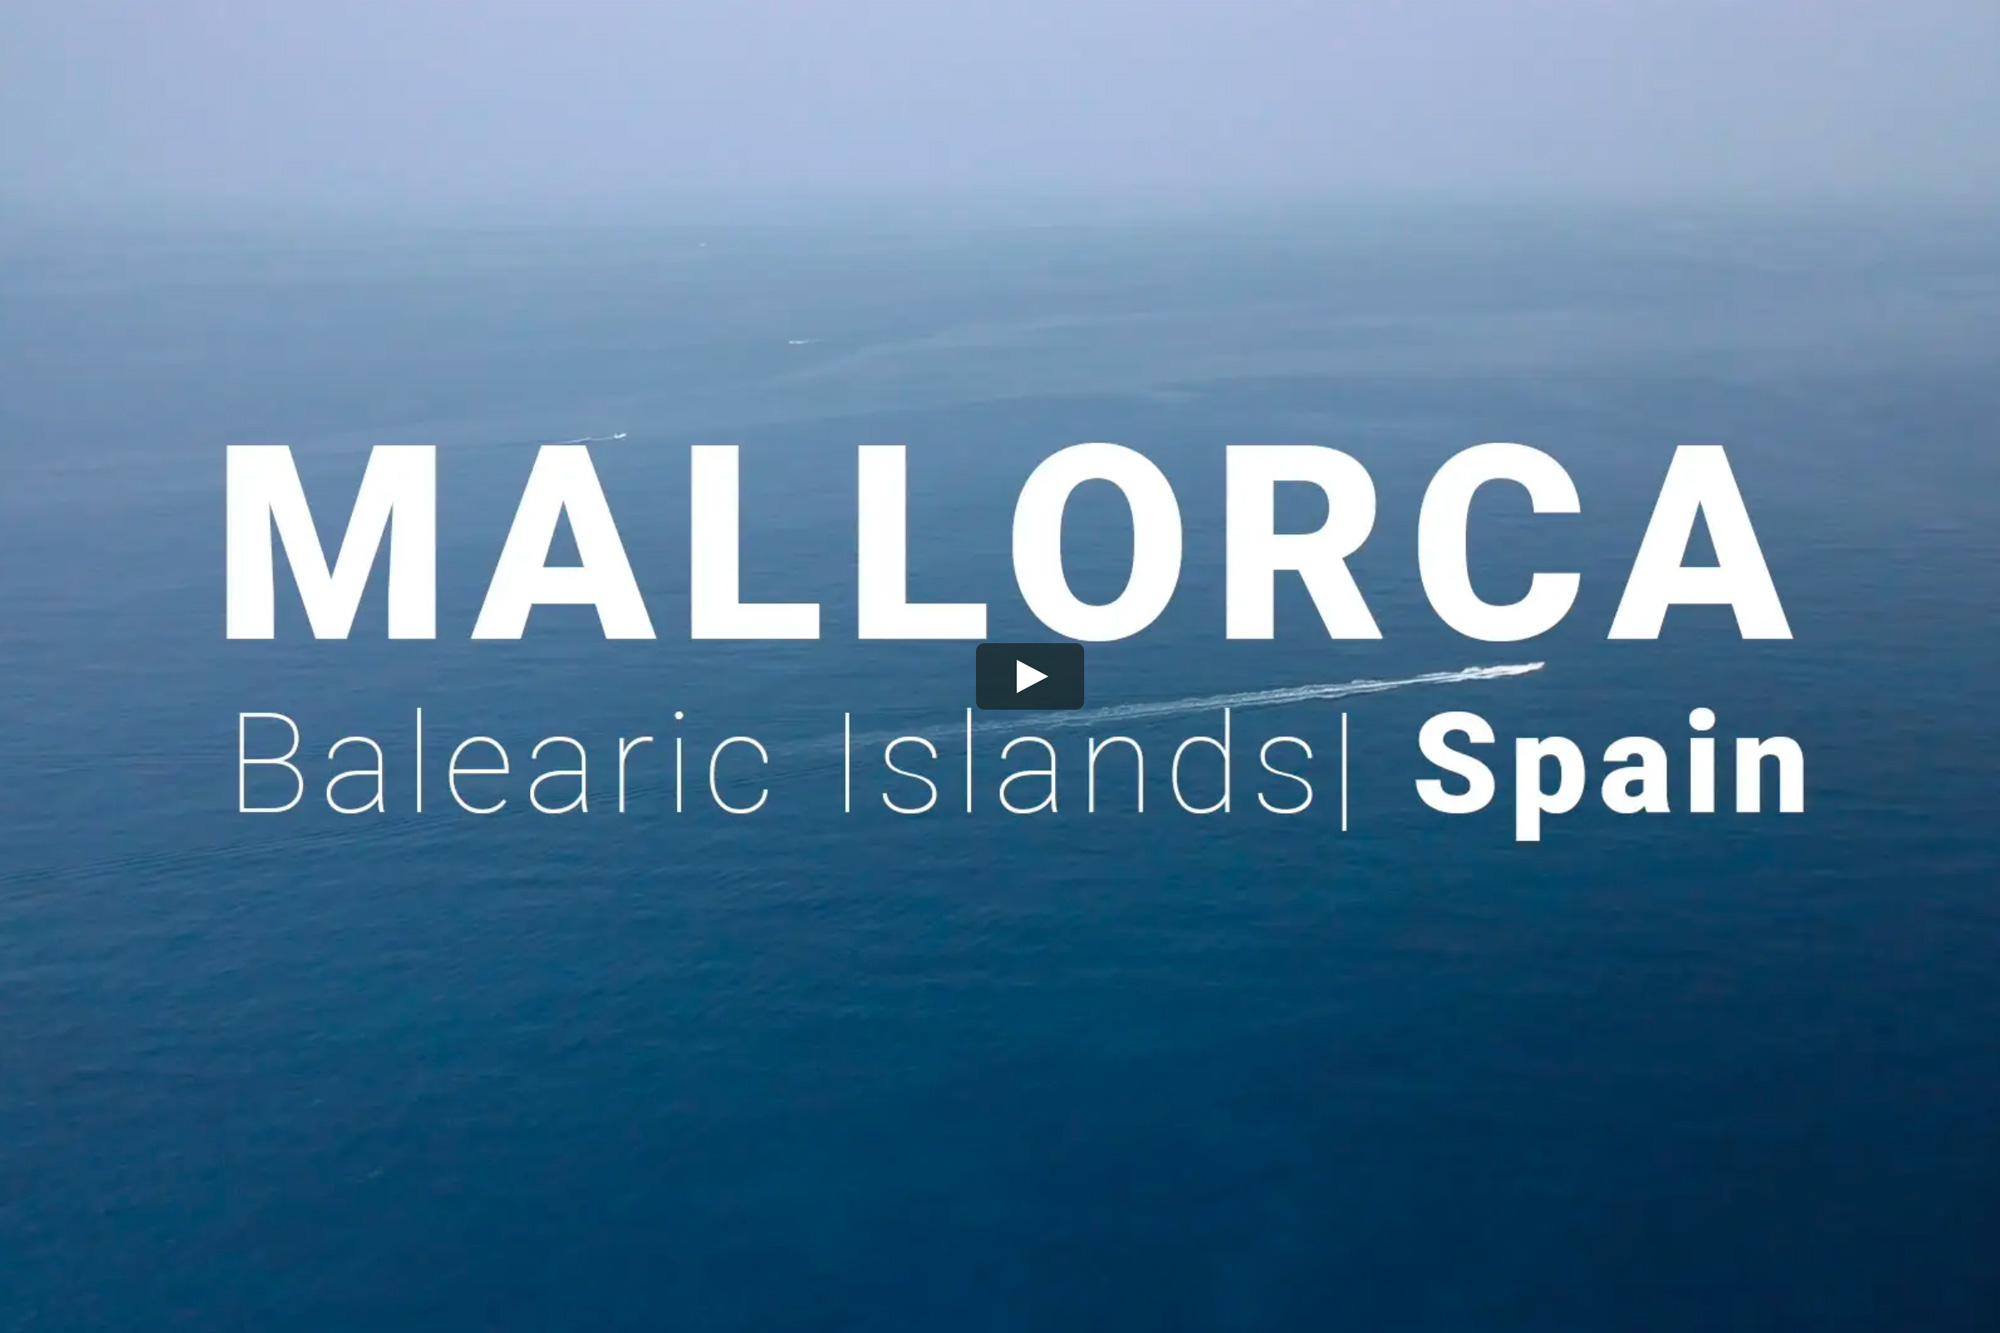 Check out some of Mallorca's top beaches